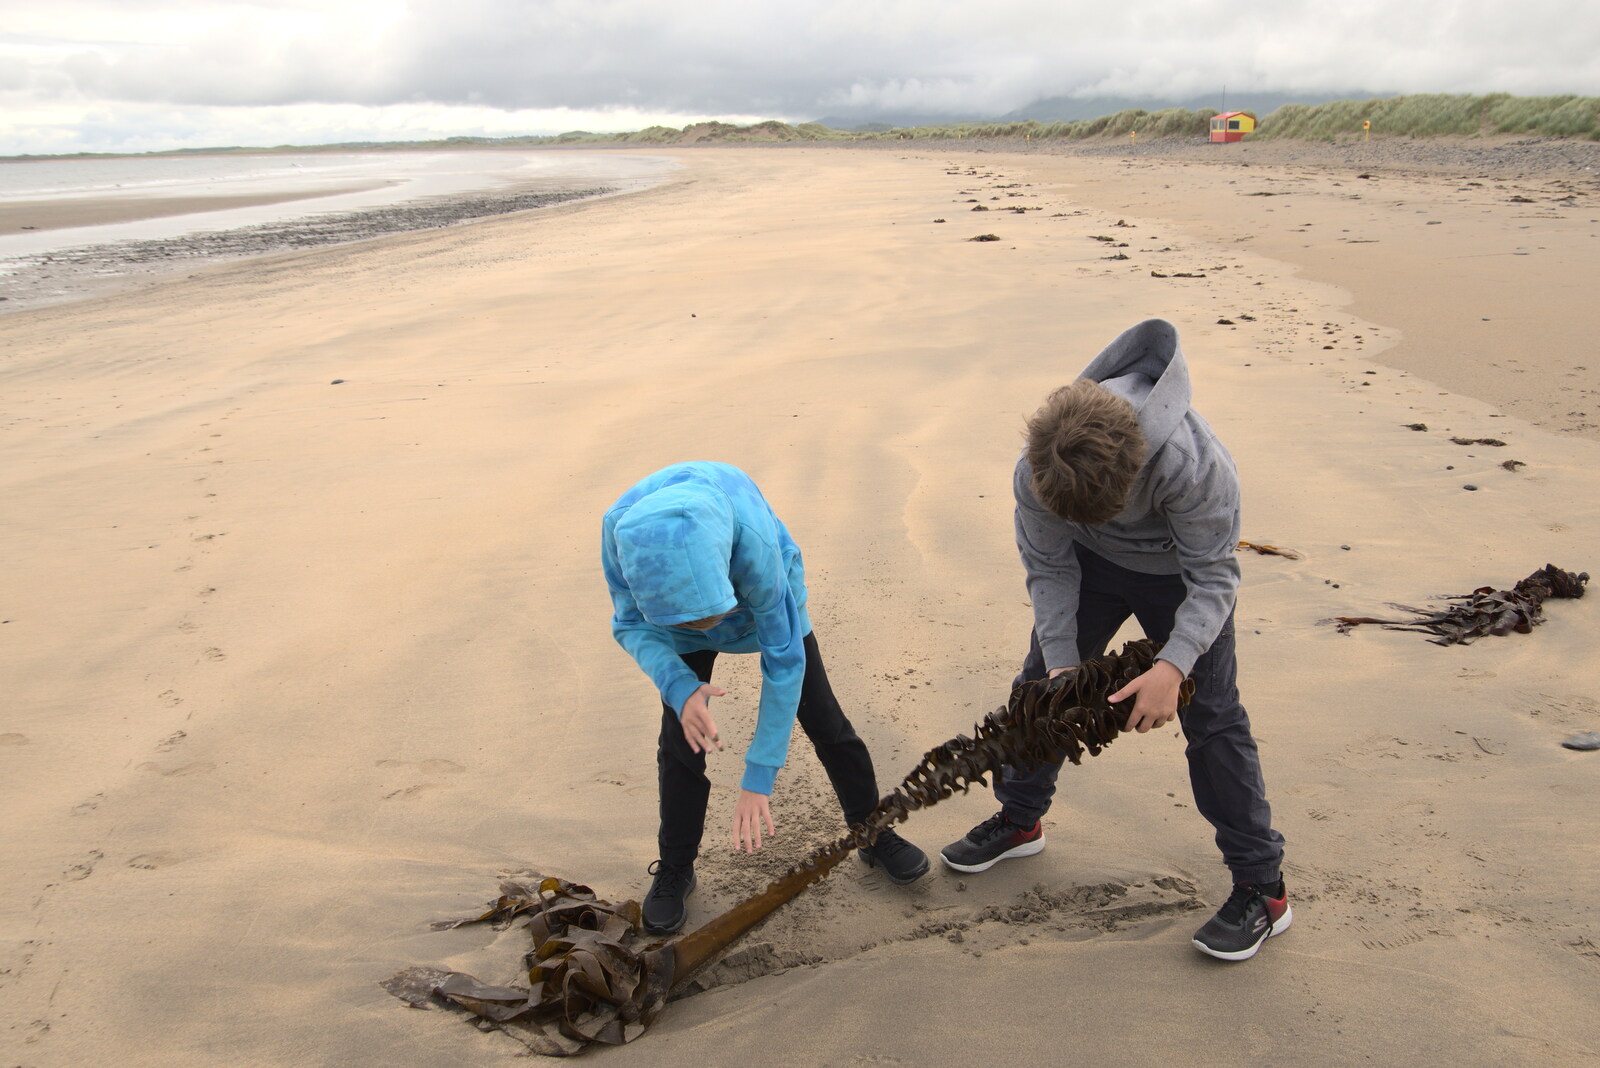 Pints of Guinness and Streedagh Beach, Grange and Sligo, Ireland - 9th August 2021: The boys haul a massive lump of seaweed around